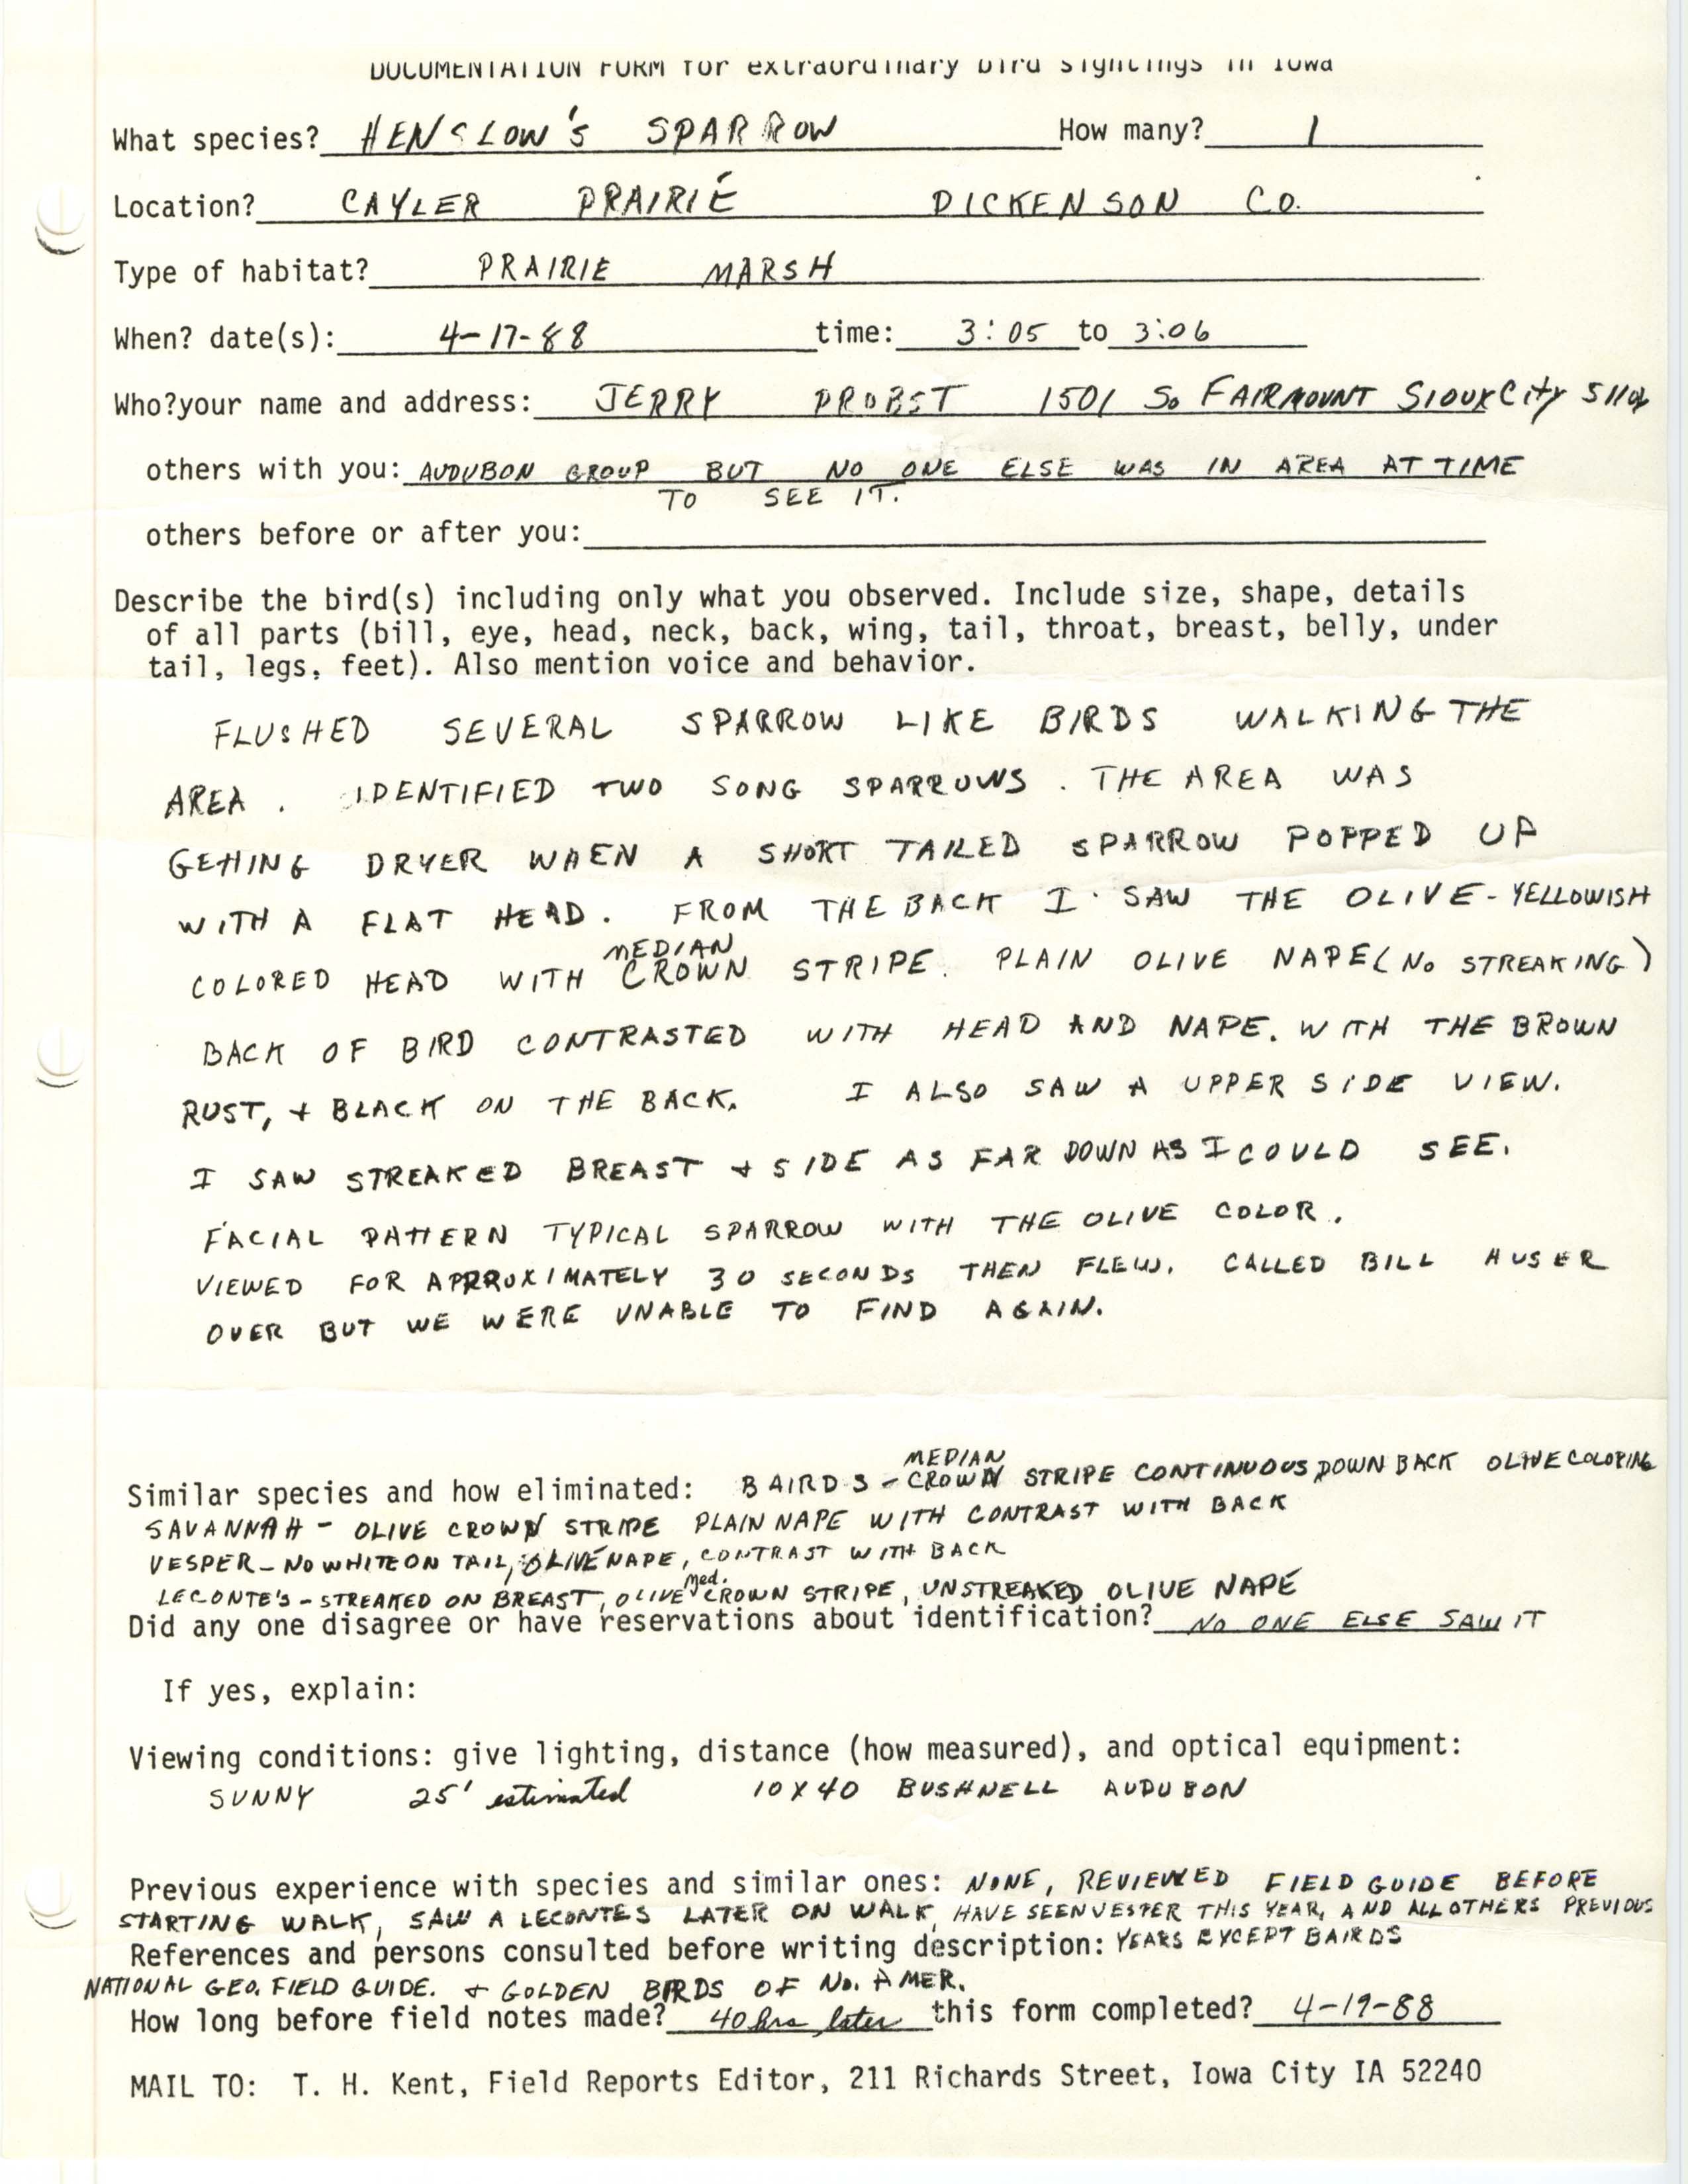 Rare bird documentation form for Henslow's Sparrow at Cayler Prairie, 1988